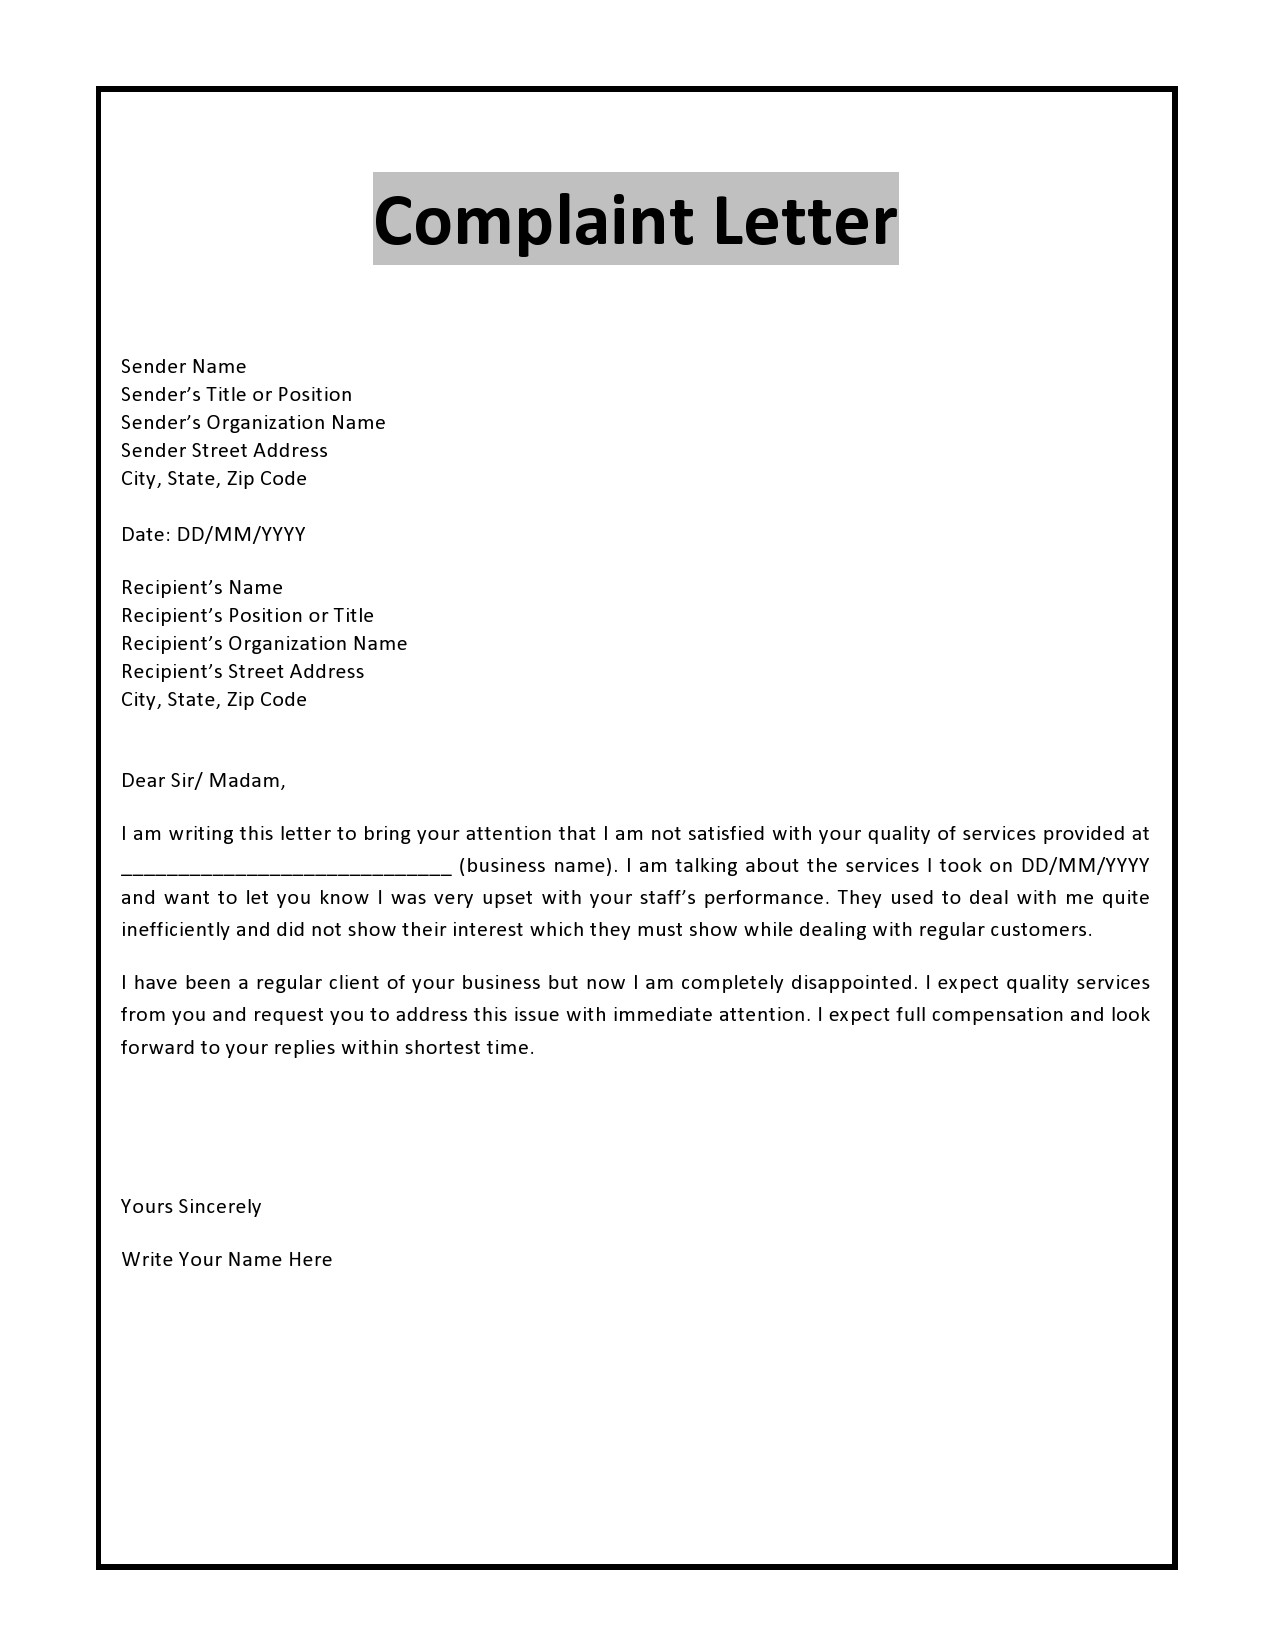 Free complaint letter template 16